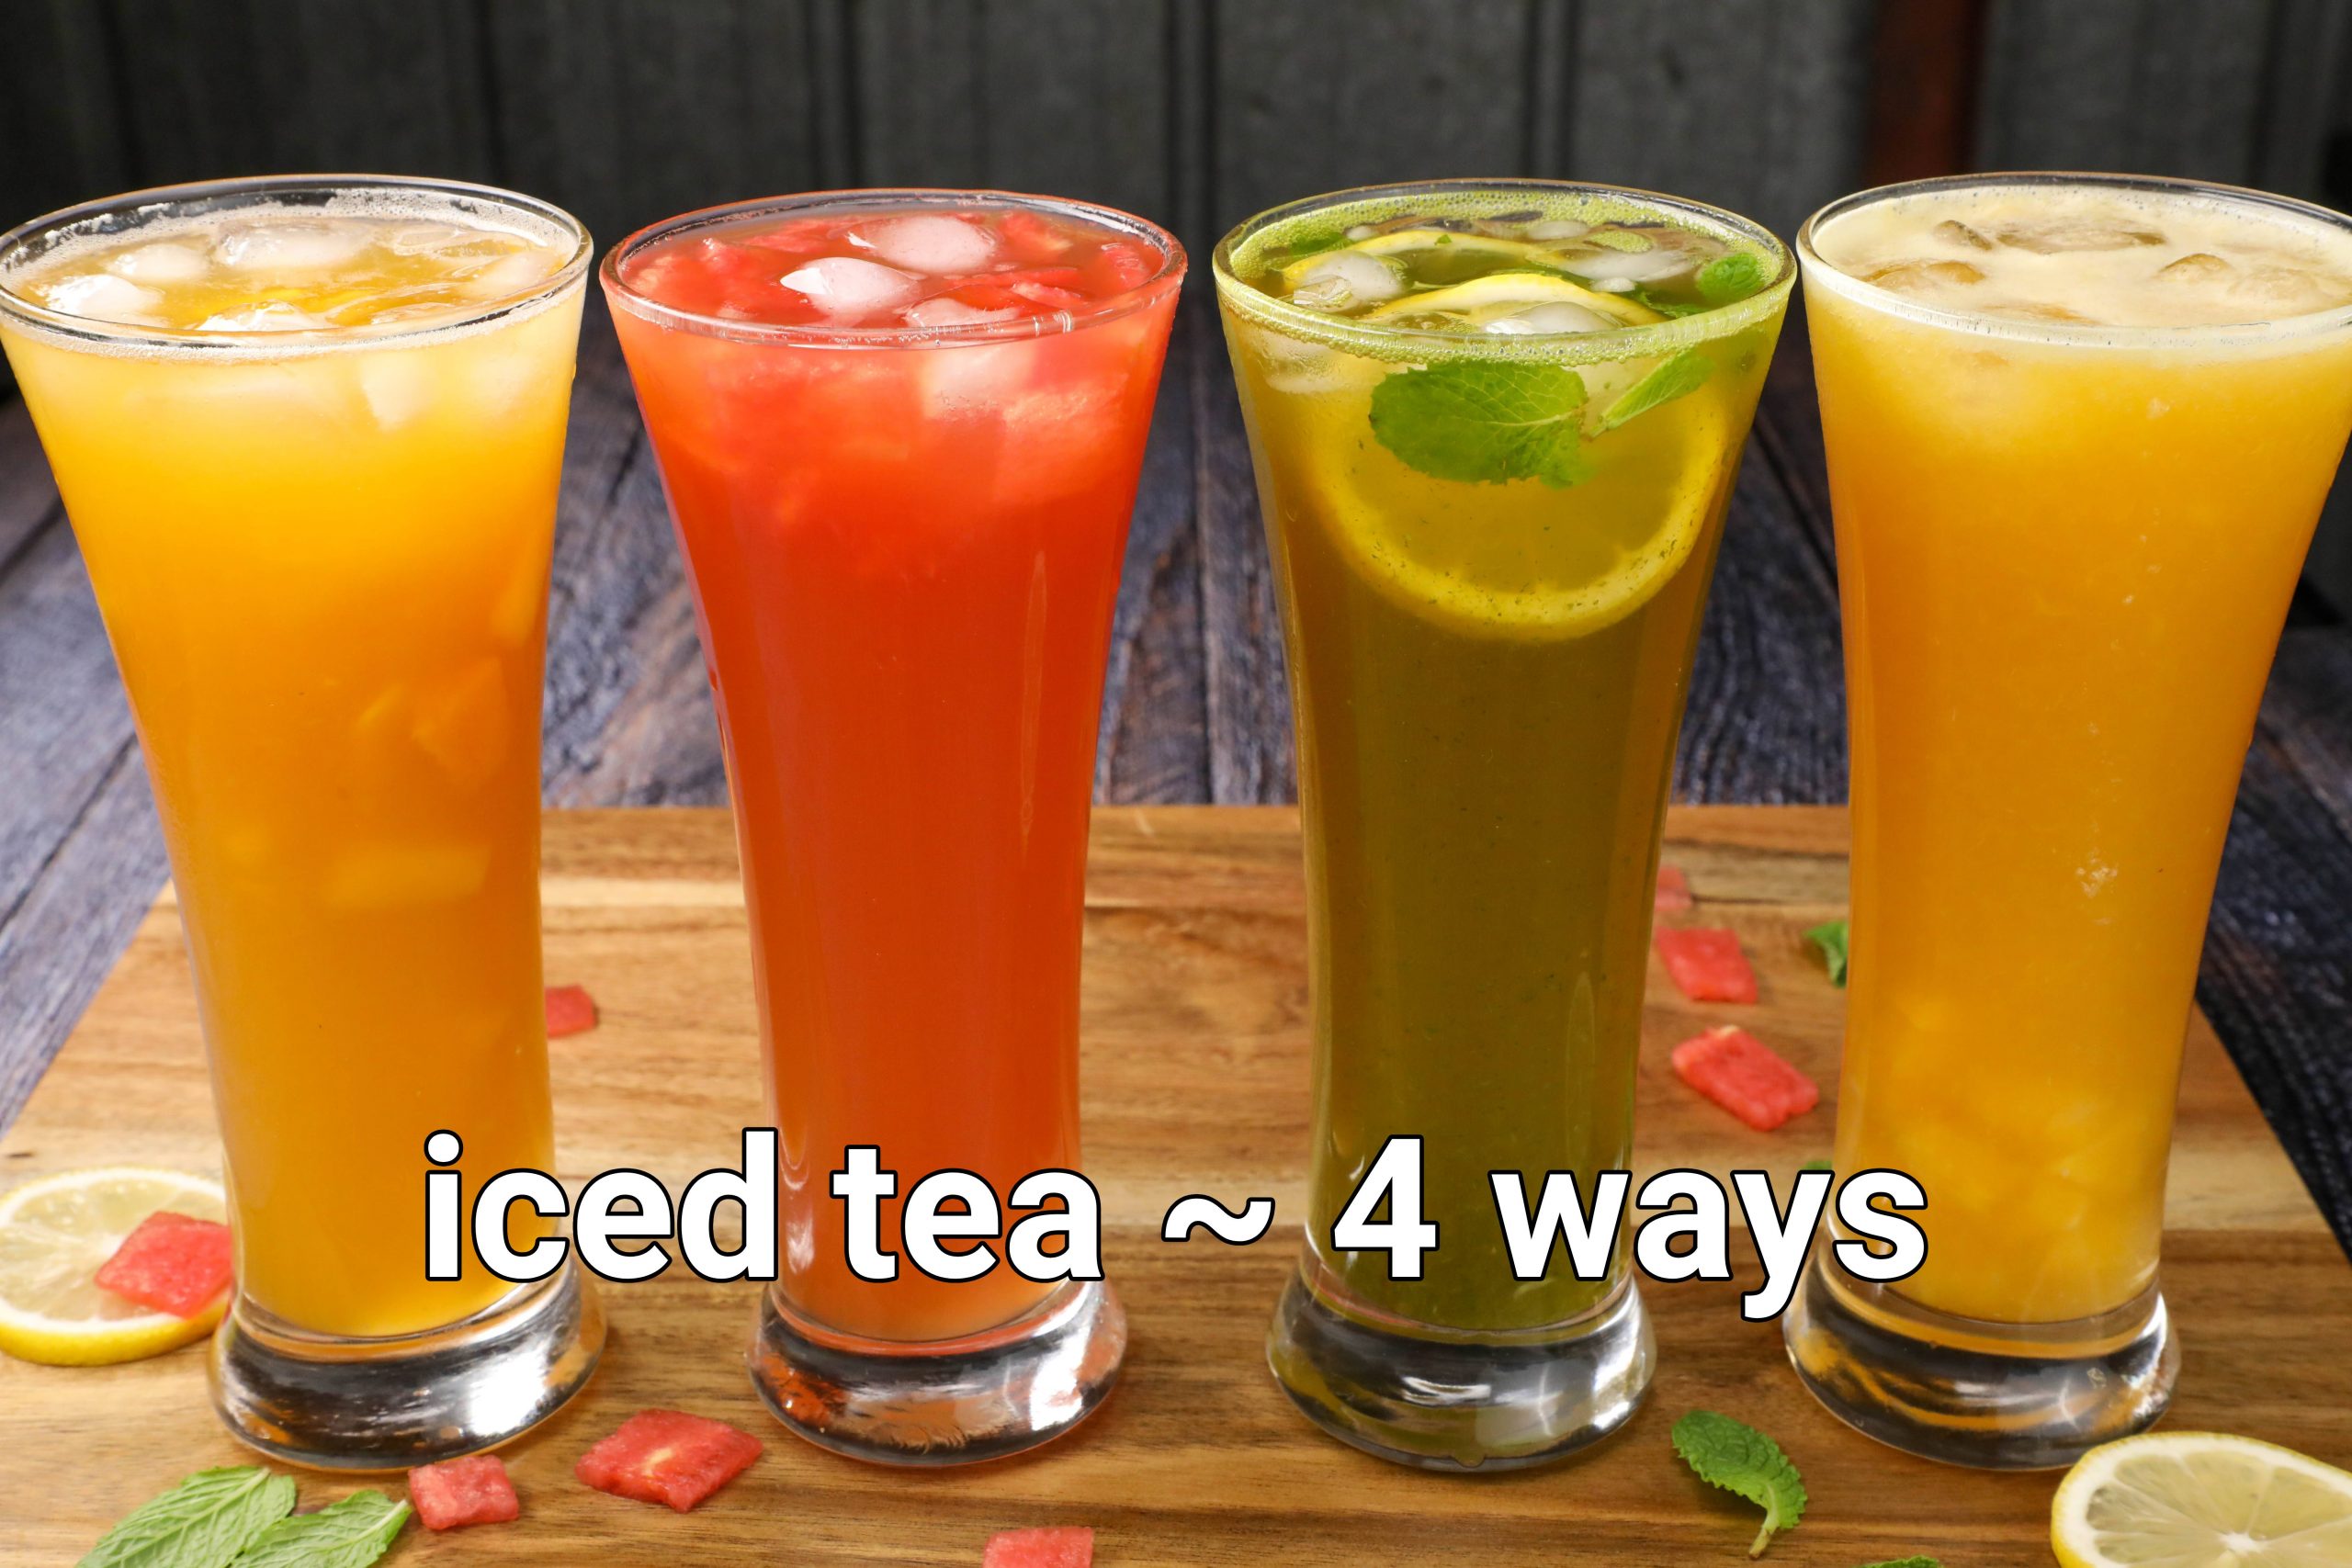 How to make iced tea